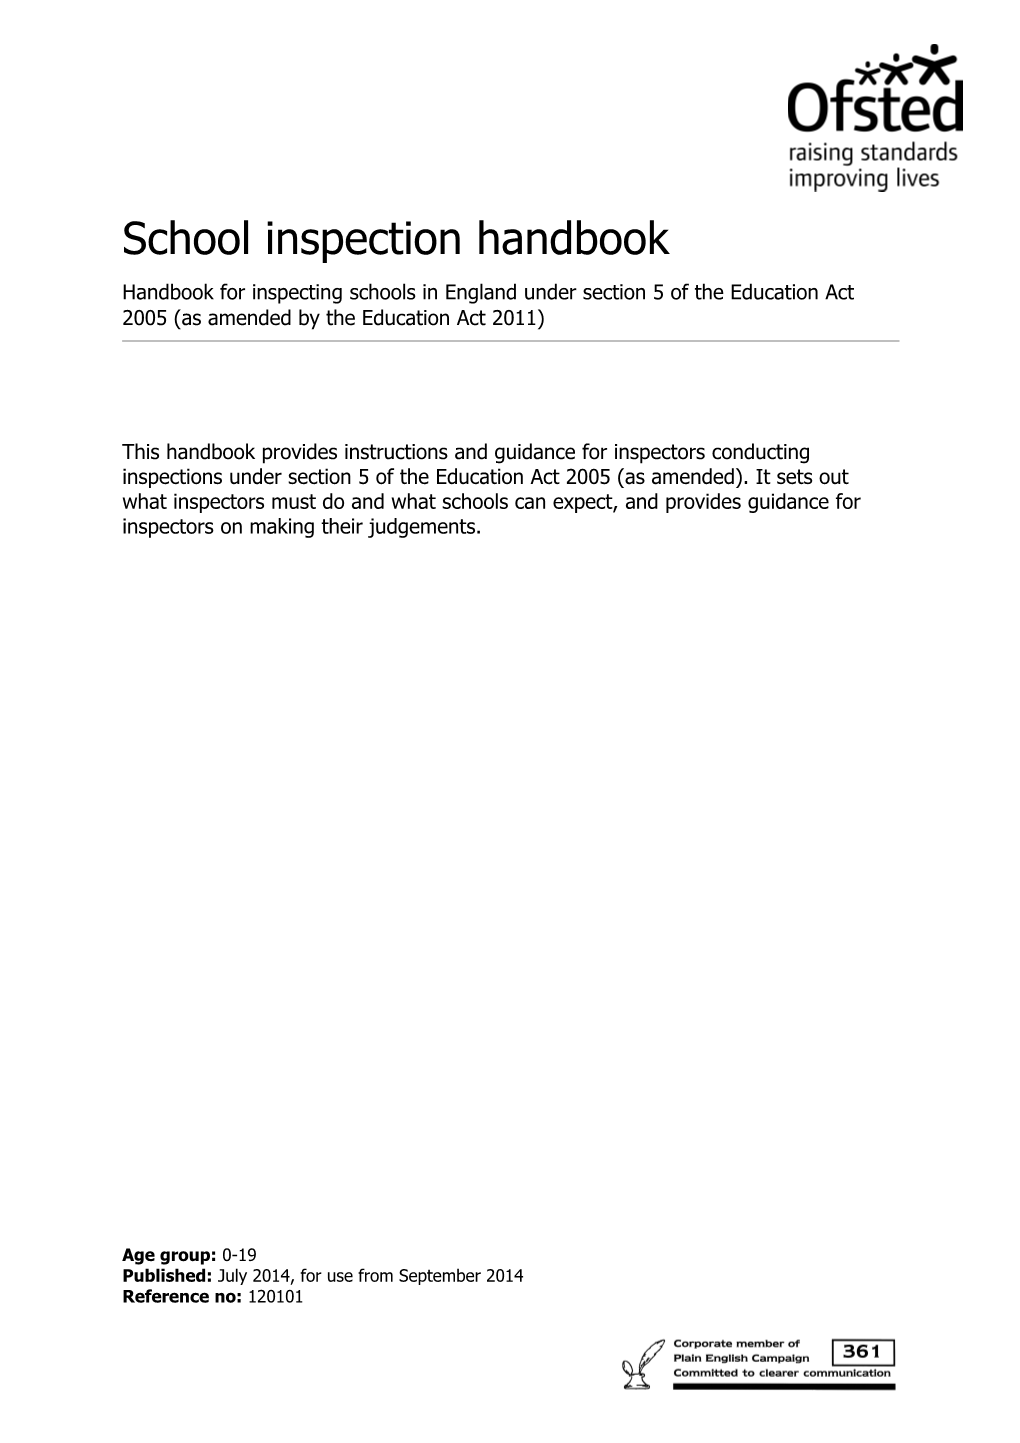 School Inspection Handbook